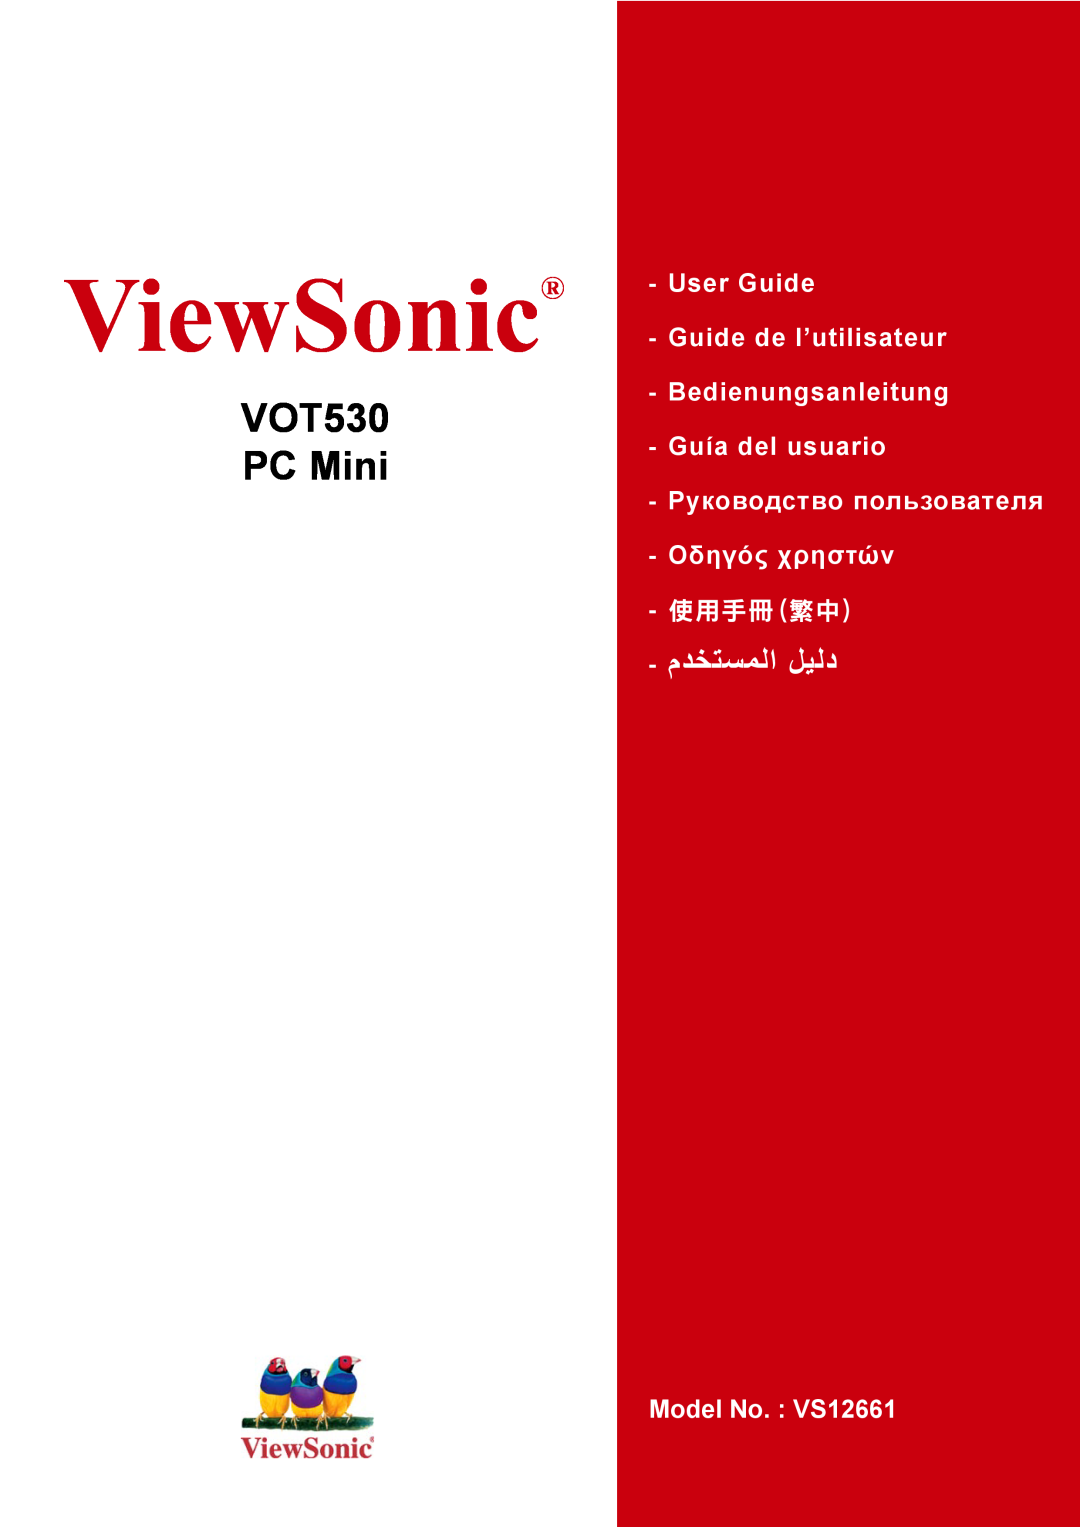 ViewSonic VS12661 manual ViewSonic, VOT530 PC Mini, ﻢﺪﺨﺘﺴﻤﻠﺍ ﻞﻴﻠﺪ, User Guide Guide de l’utilisateur Bedienungsanleitung 